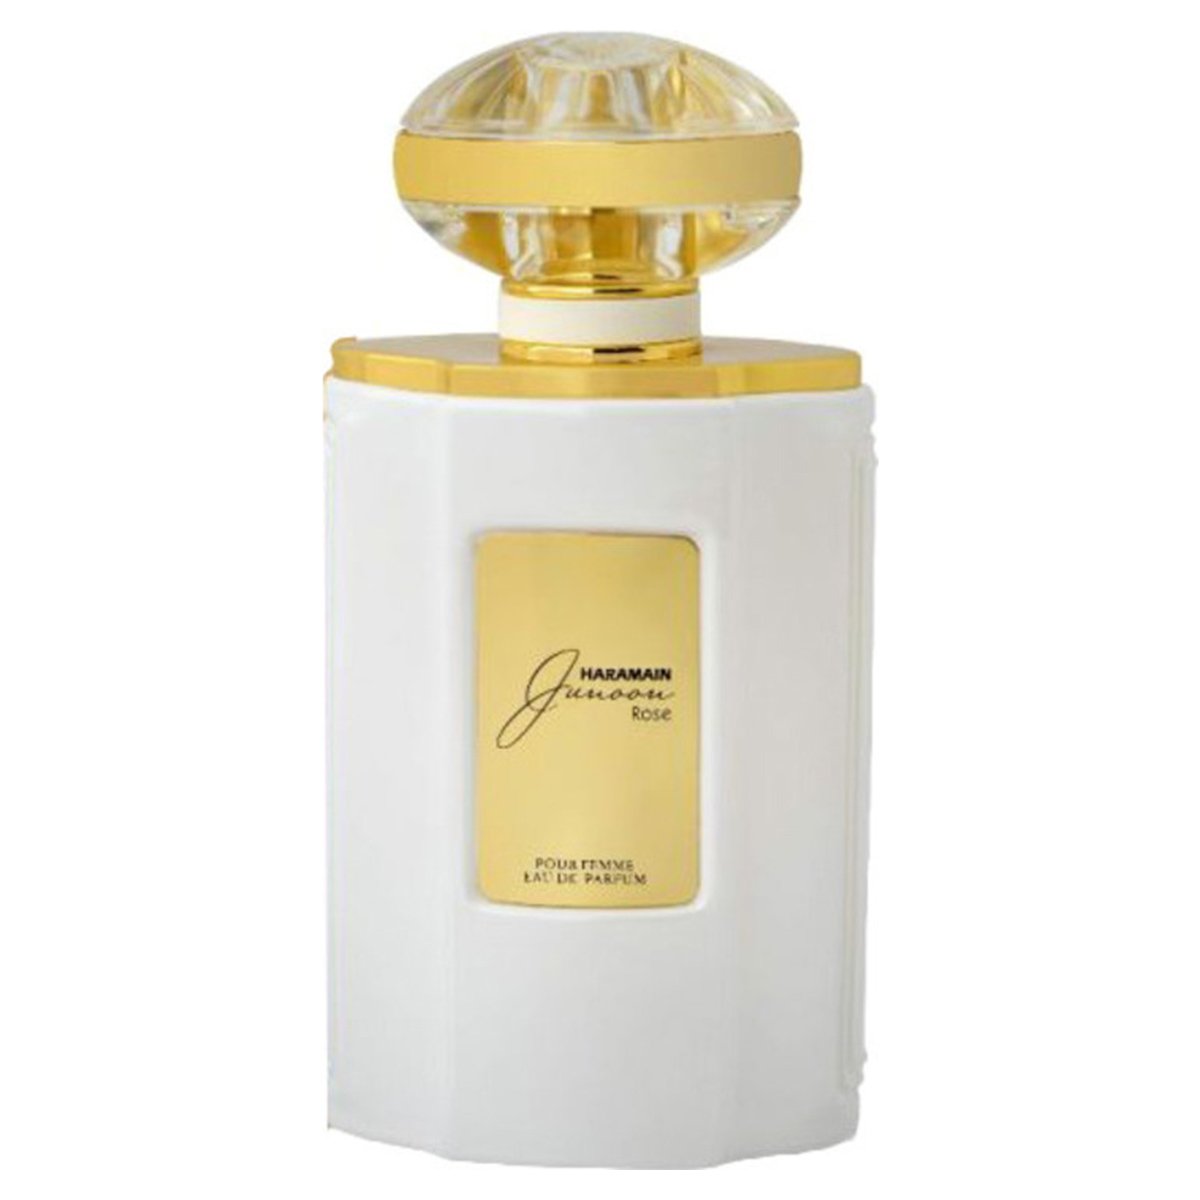 Junoon Rose Eau de Parfum 75ml Al Haramain-Perfume Heaven